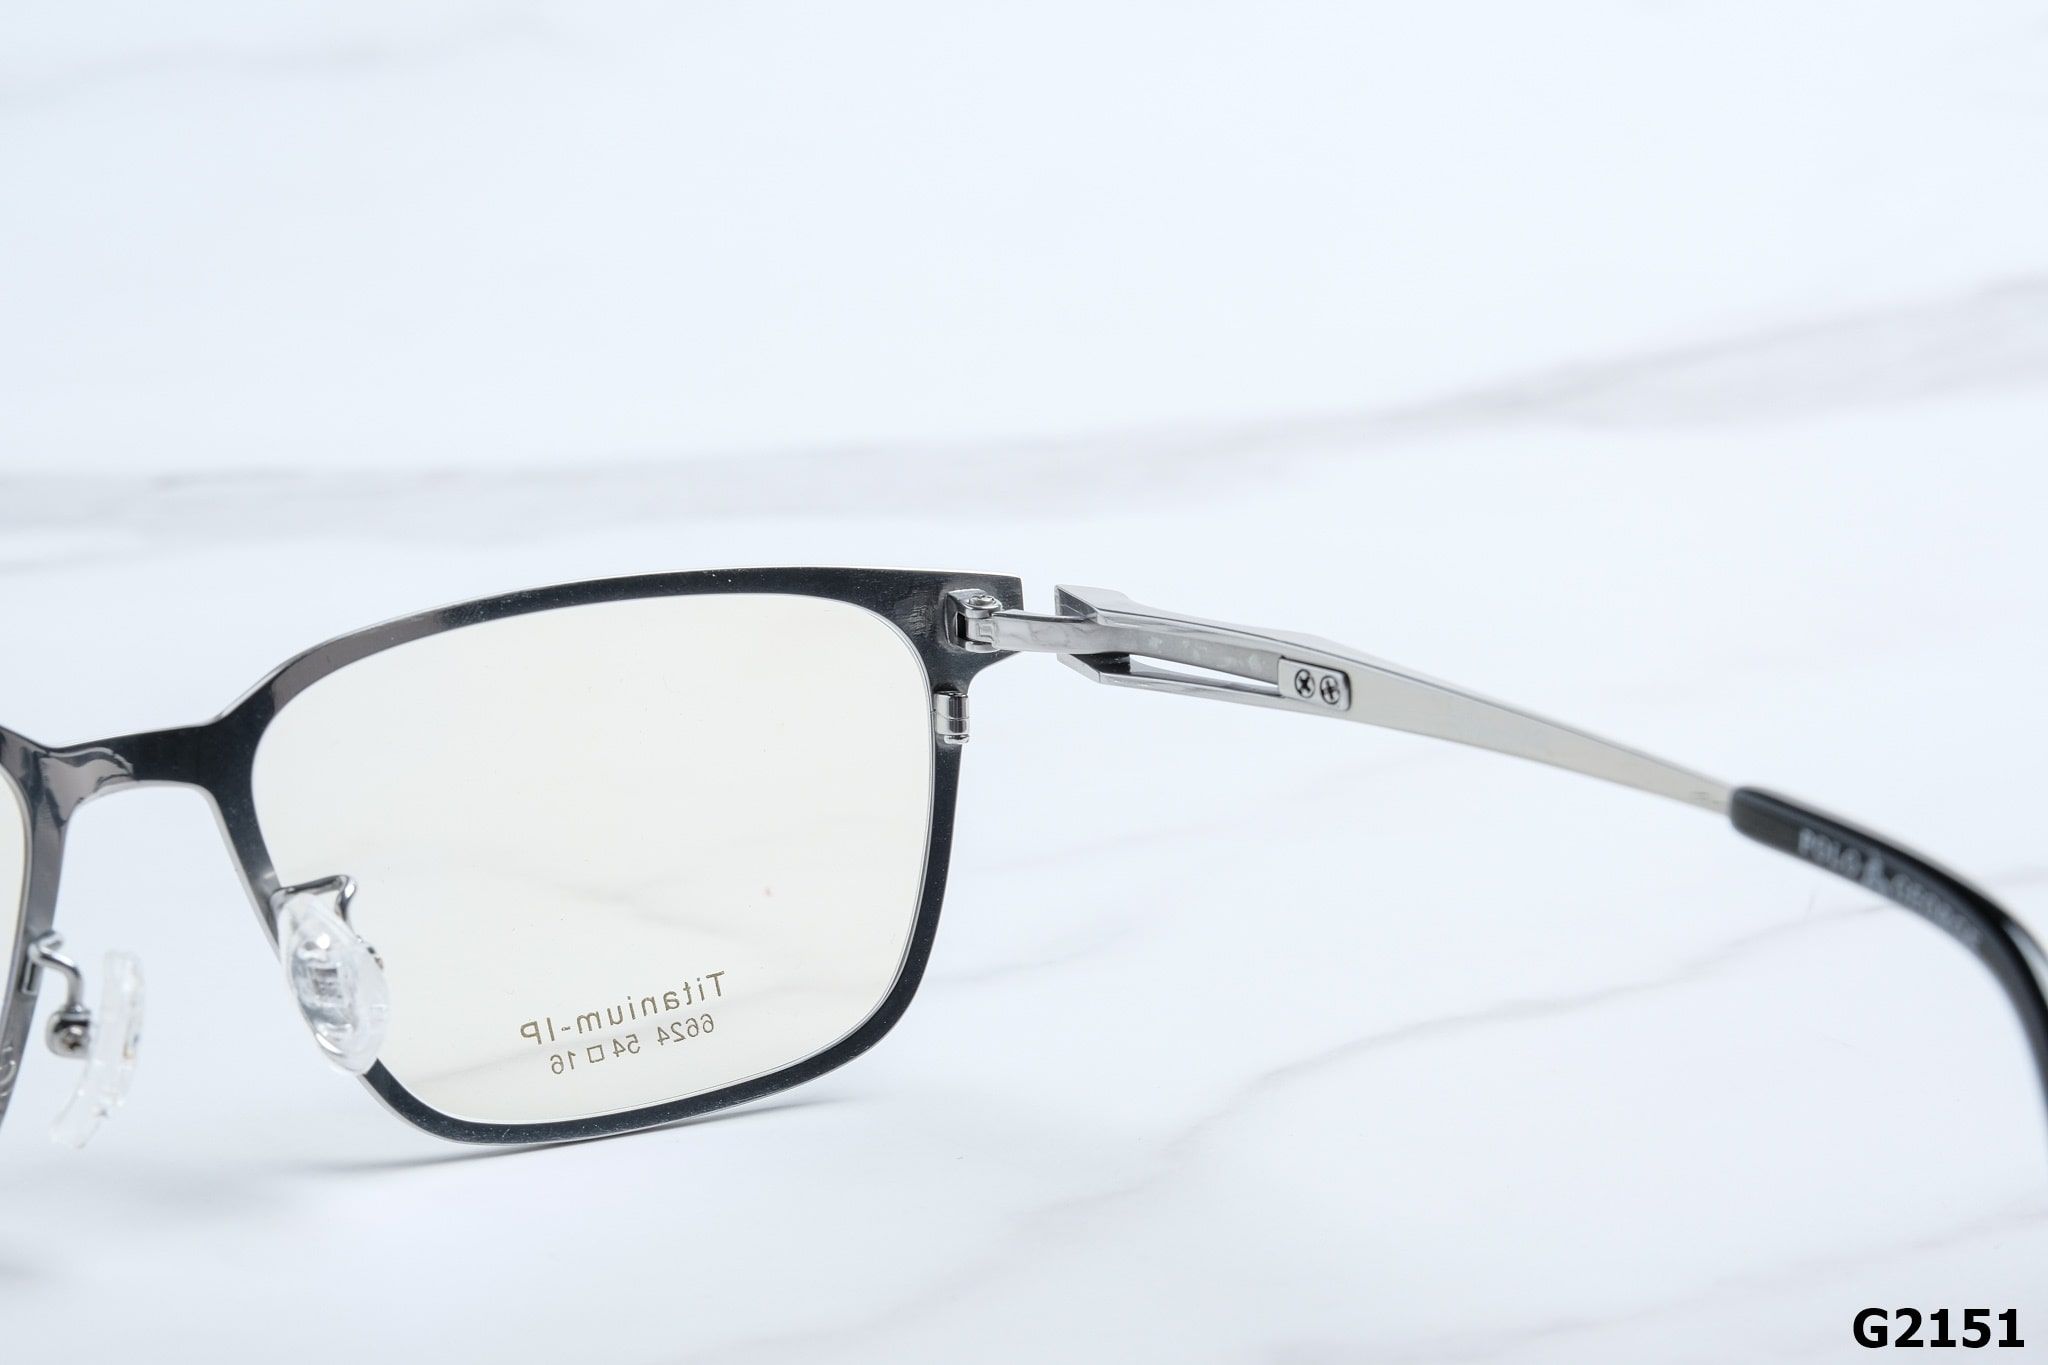  SHADY Eyewear - Glasses - G2151 